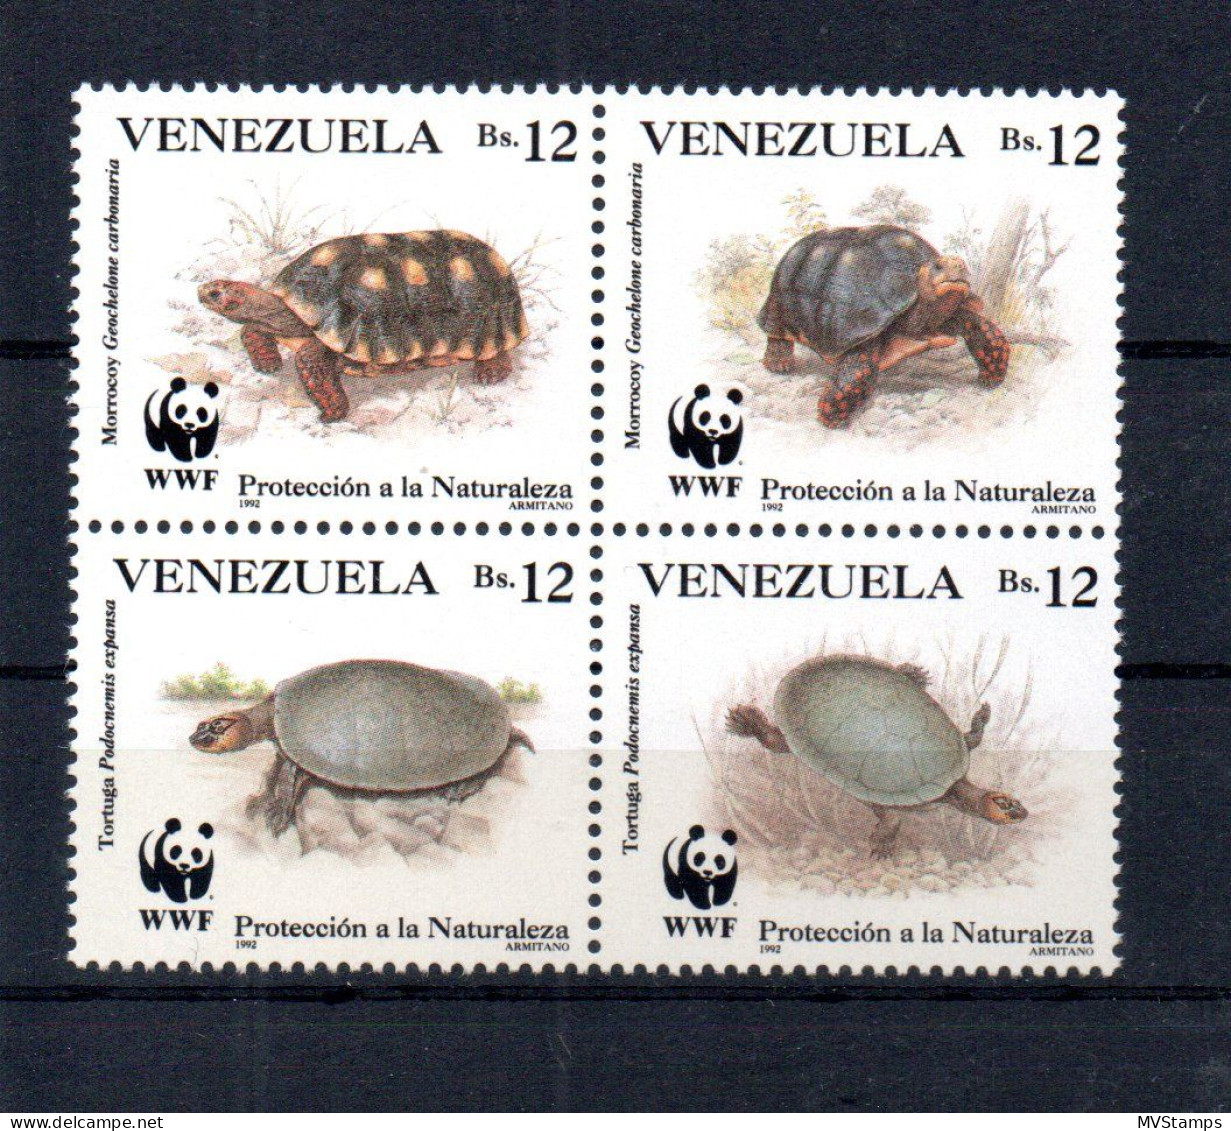 Venezuela 1992 Satz 2729/32 WWF/Schildkrote Postfrisch - Venezuela